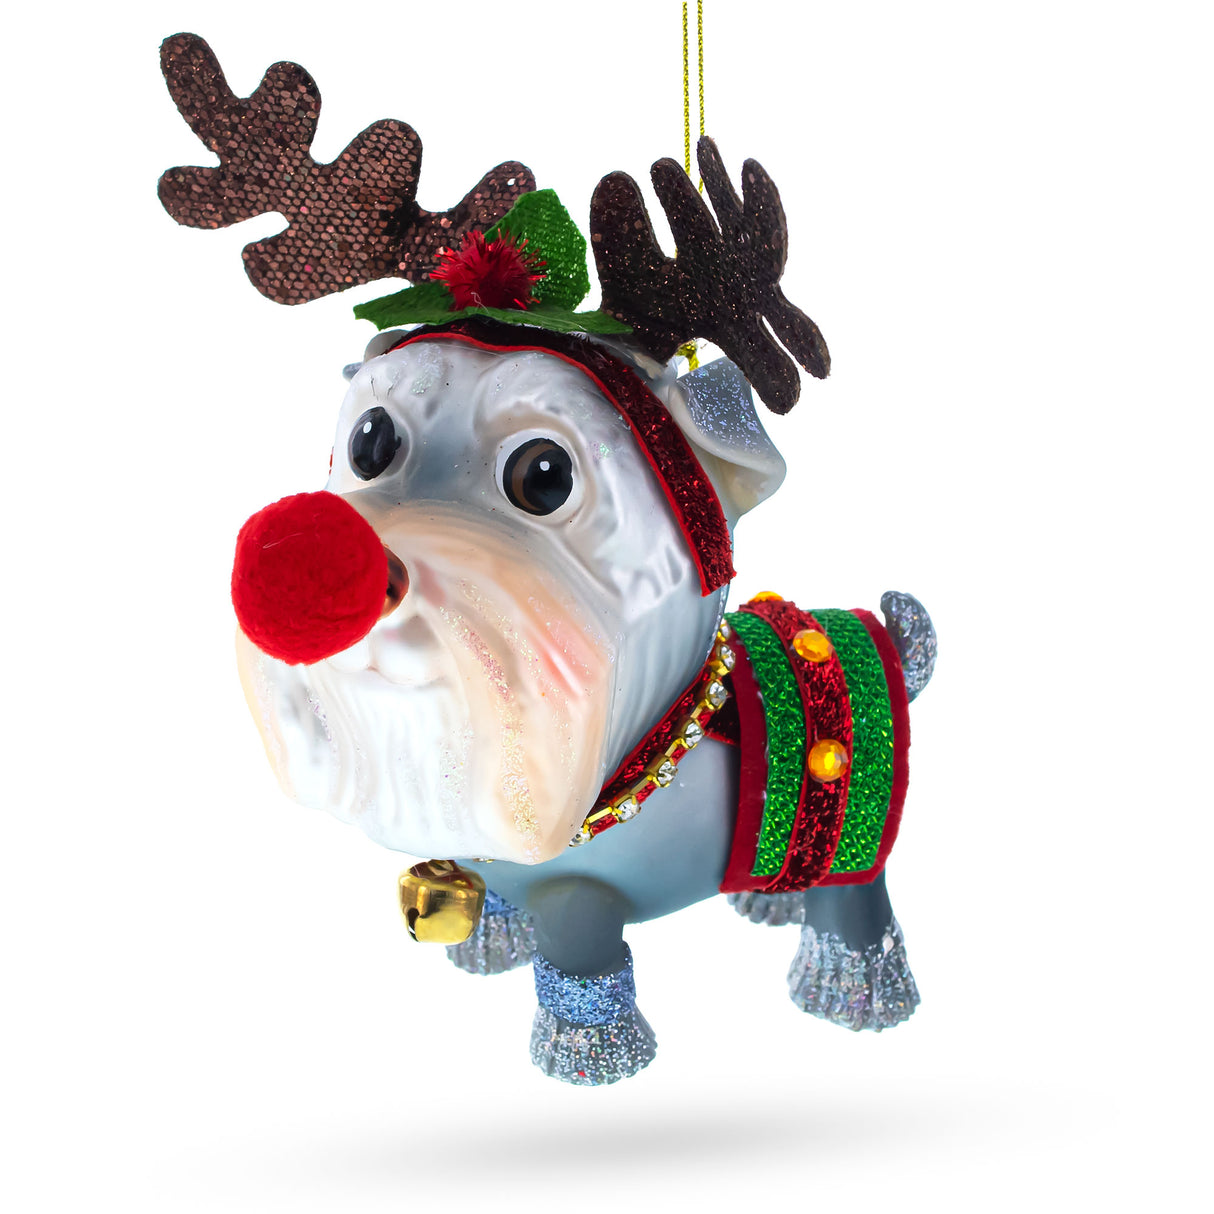 Schnauzer wearing Reindeer Costume - Blown Glass Christmas Ornament in Orange color,  shape